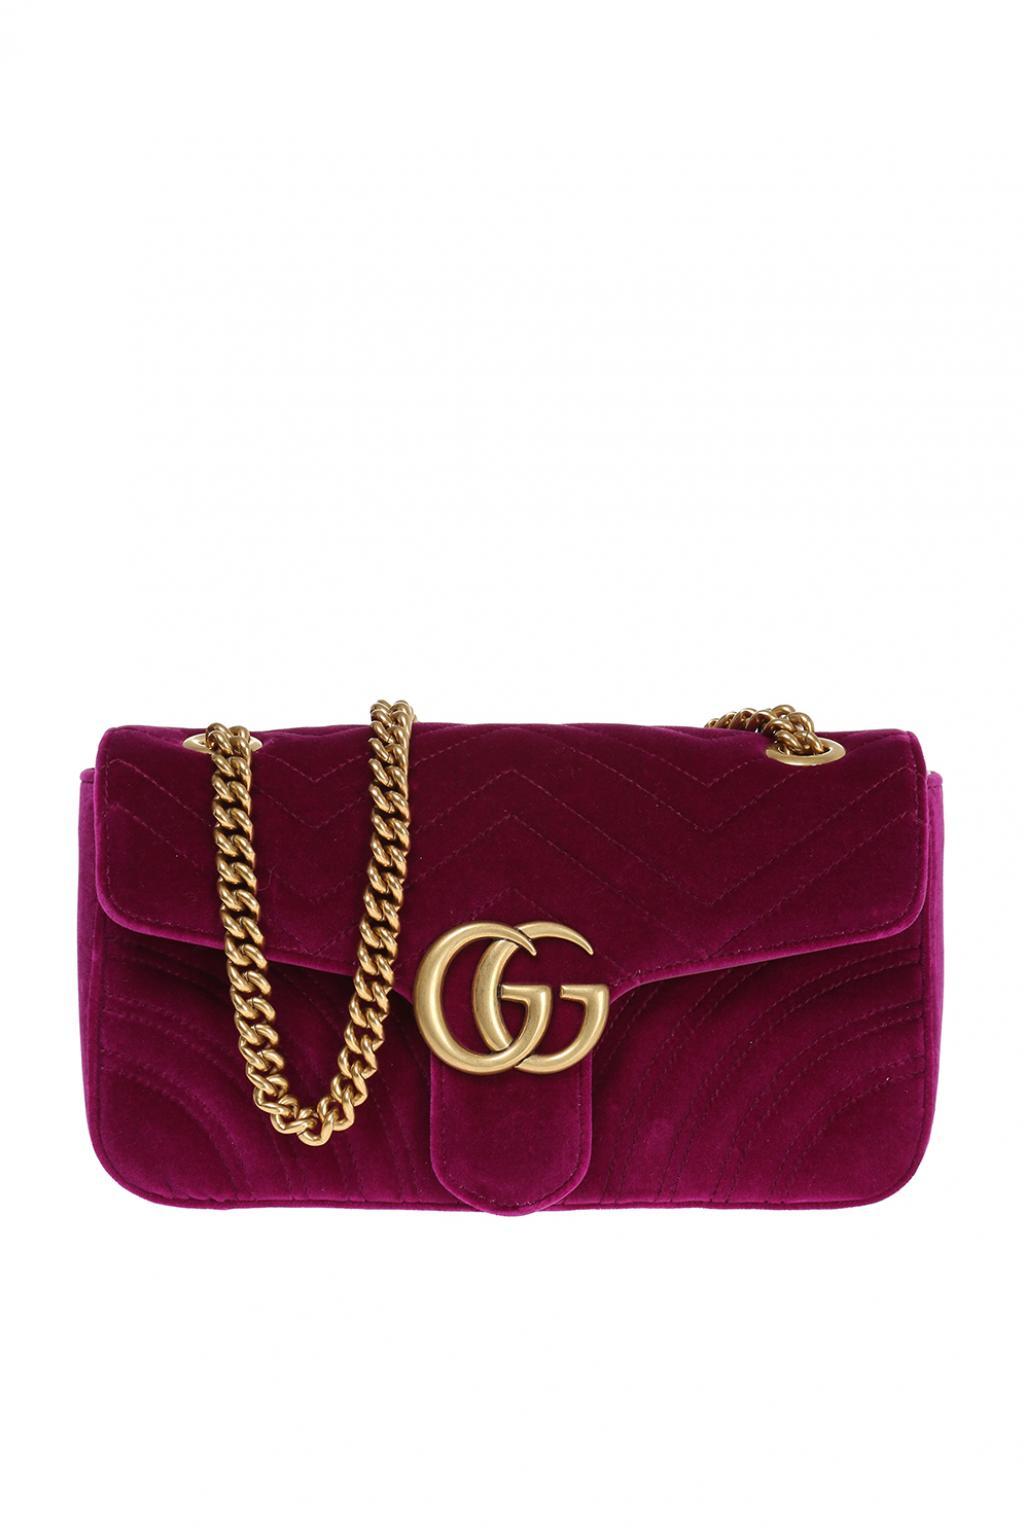 Gucci &#39;GG Marmont&#39; Velvet Shoulder Bag in Purple - Lyst